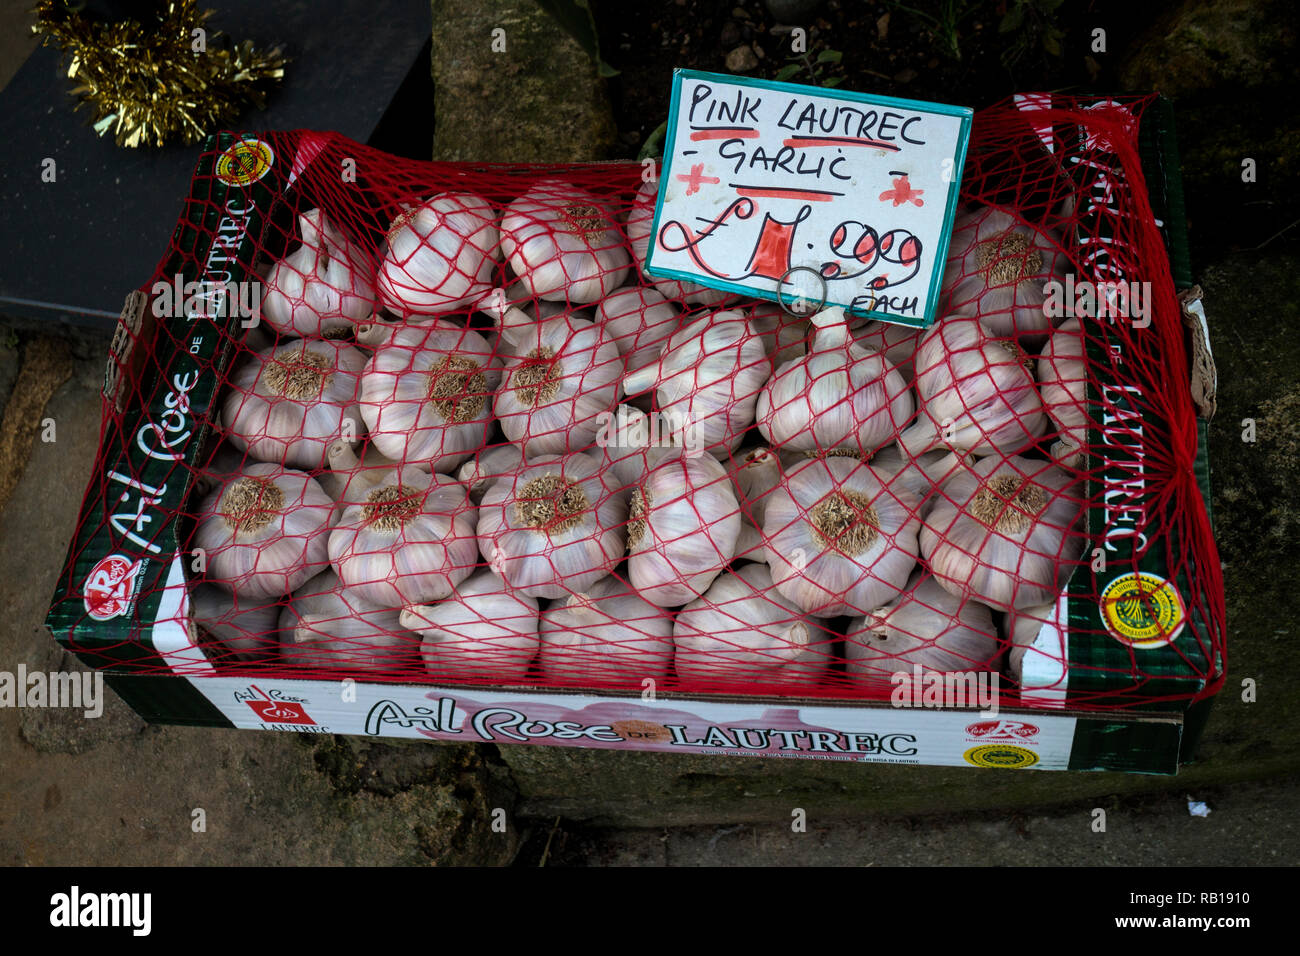 Pink Lautrec Garlic on sale Stock Photo